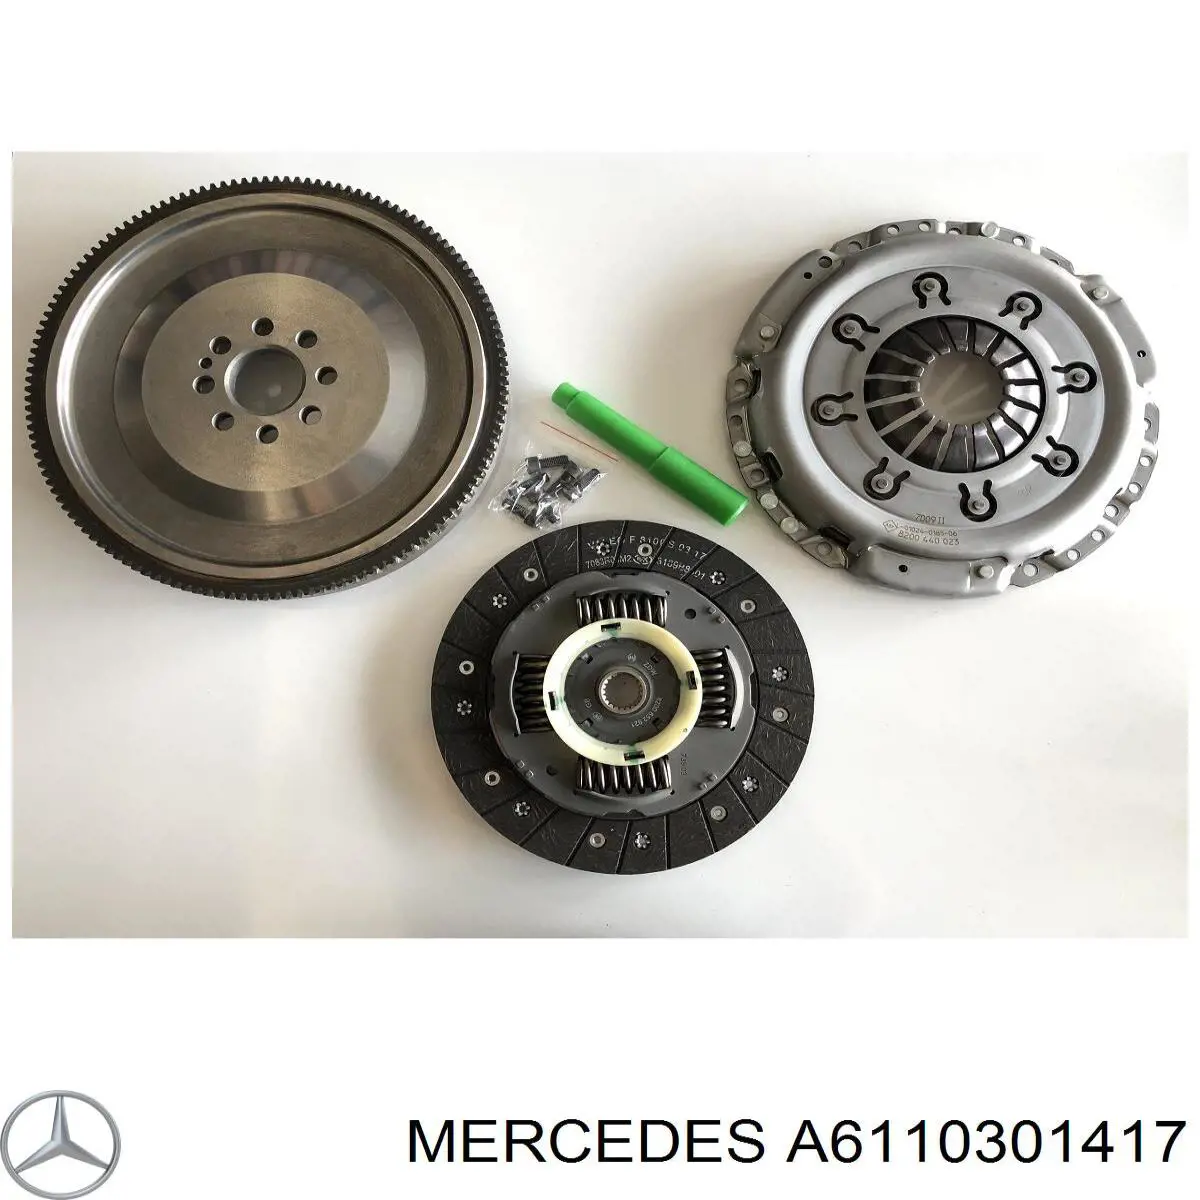 A6110301417 Mercedes поршень в комплекте на 1 цилиндр, std